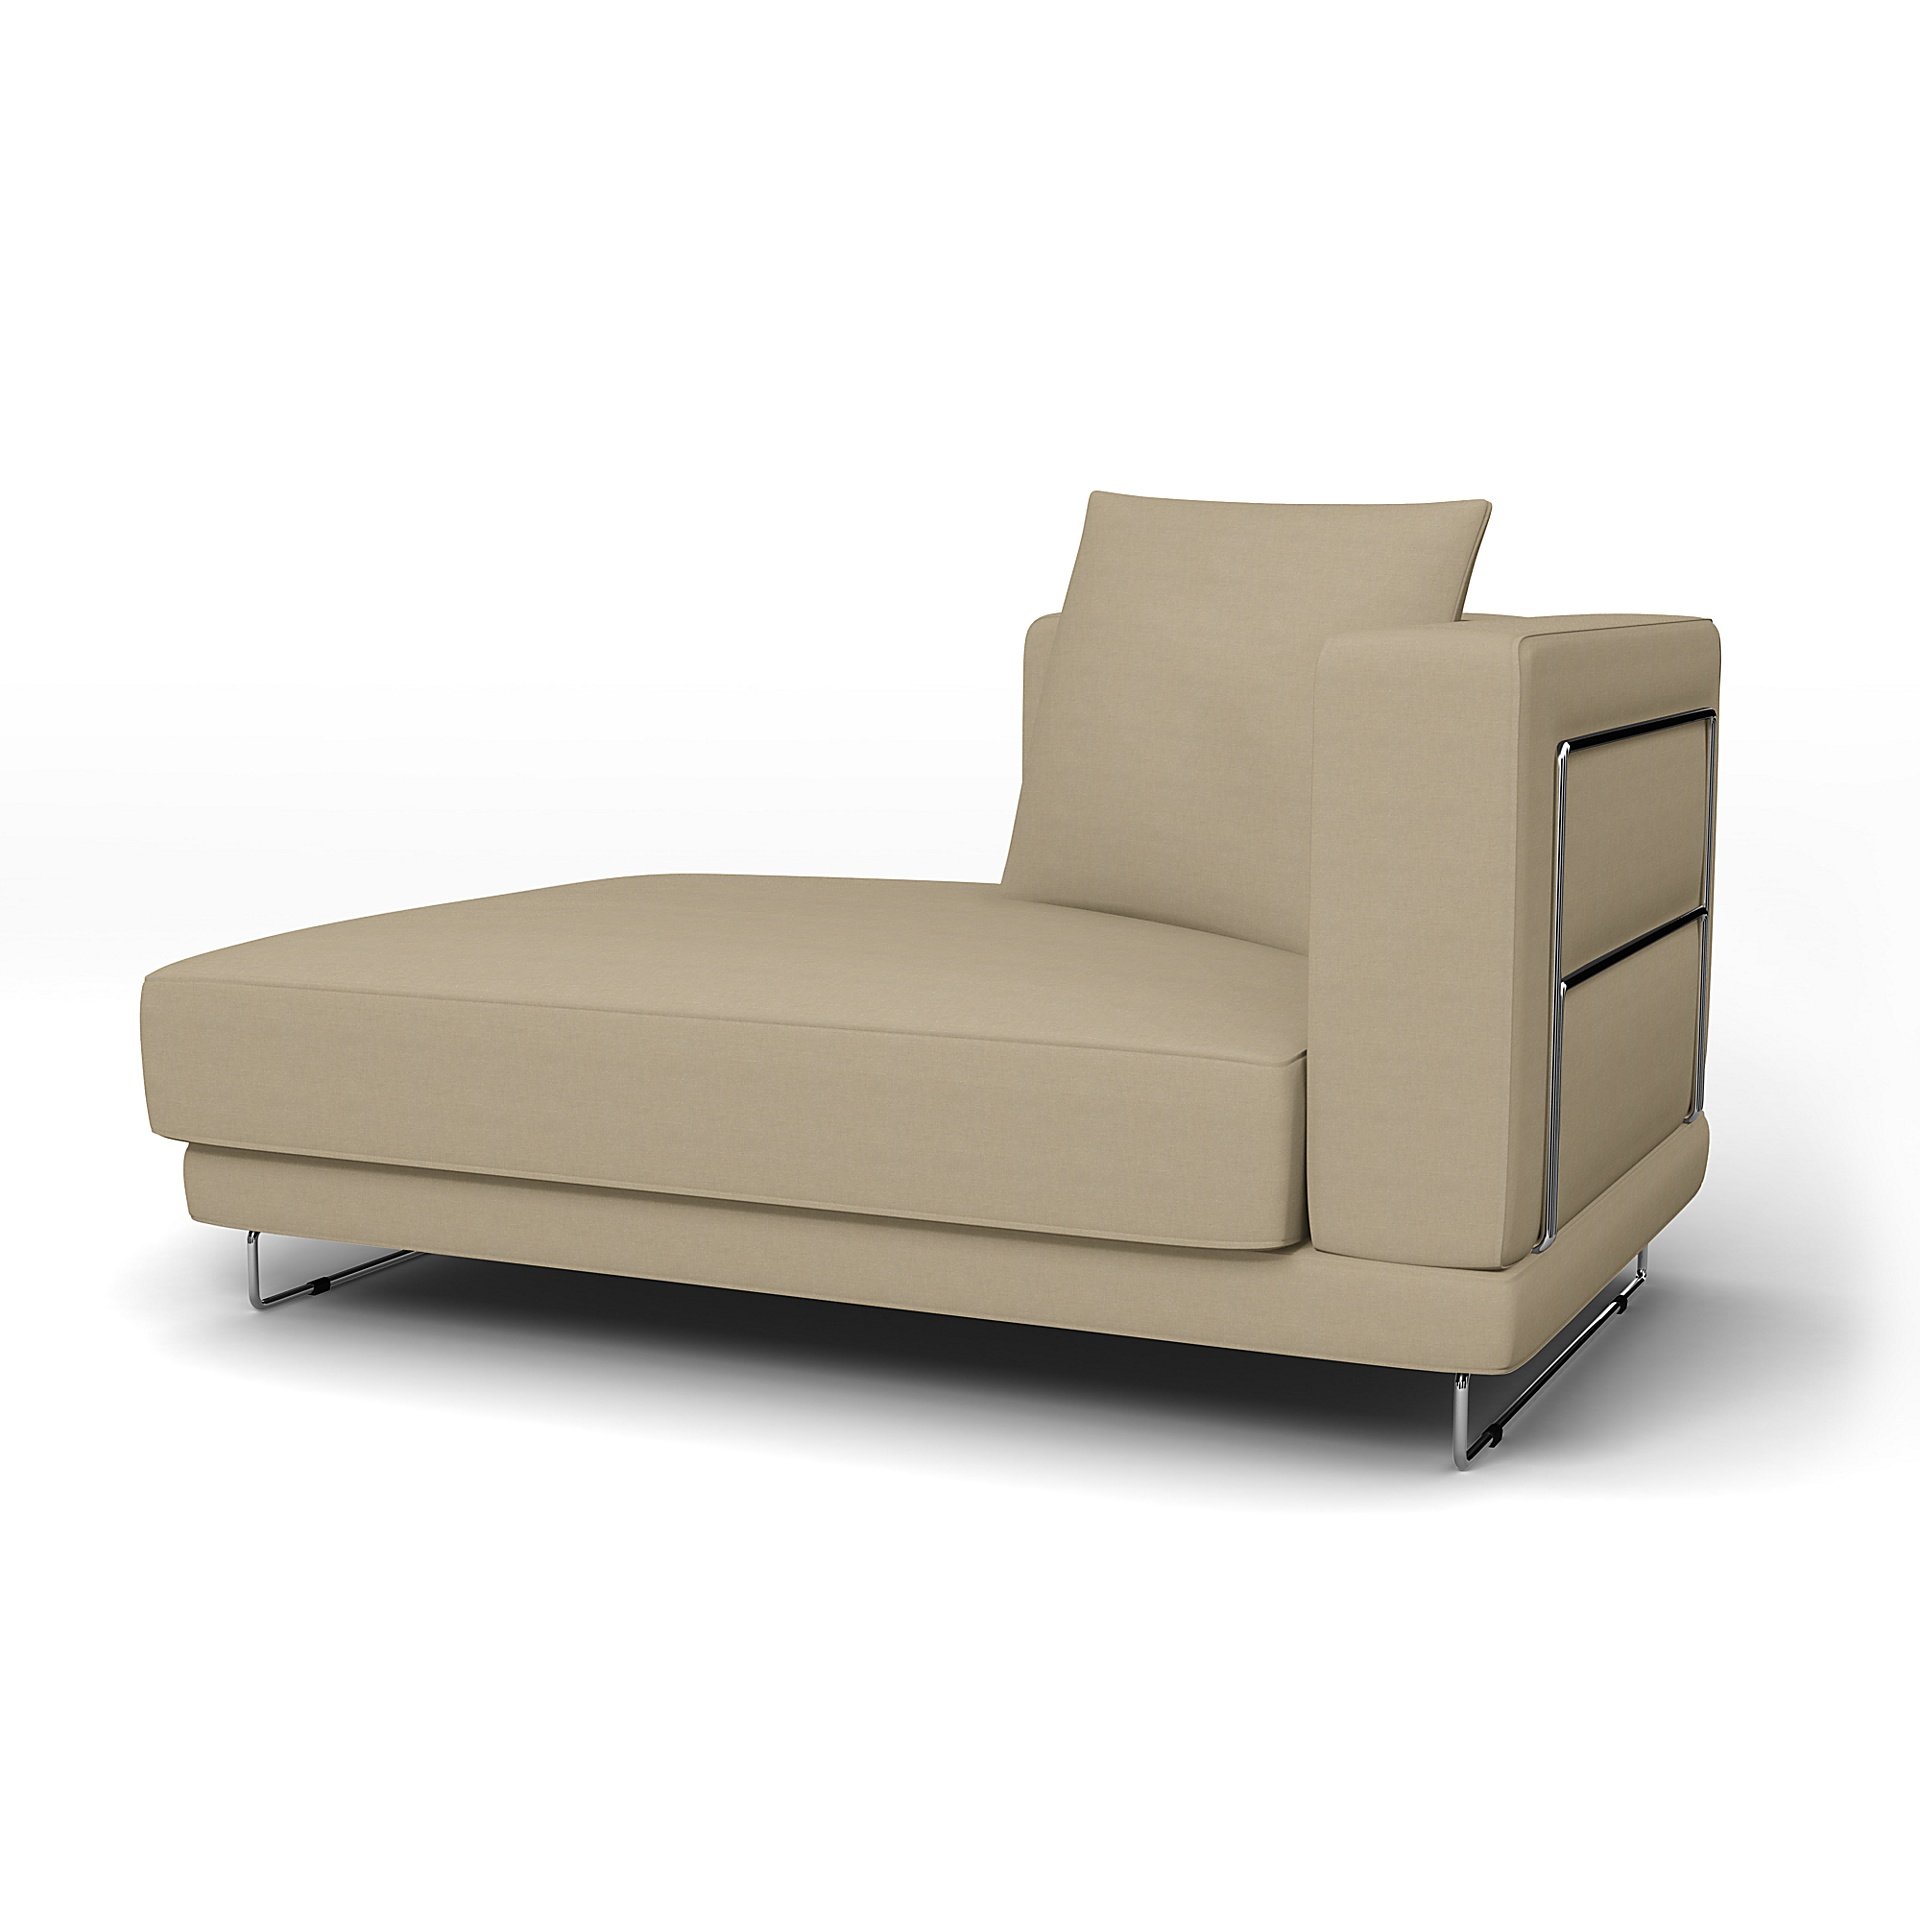 IKEA - Tylosand Chaise with Left Armrest Cover, Tan, Linen - Bemz